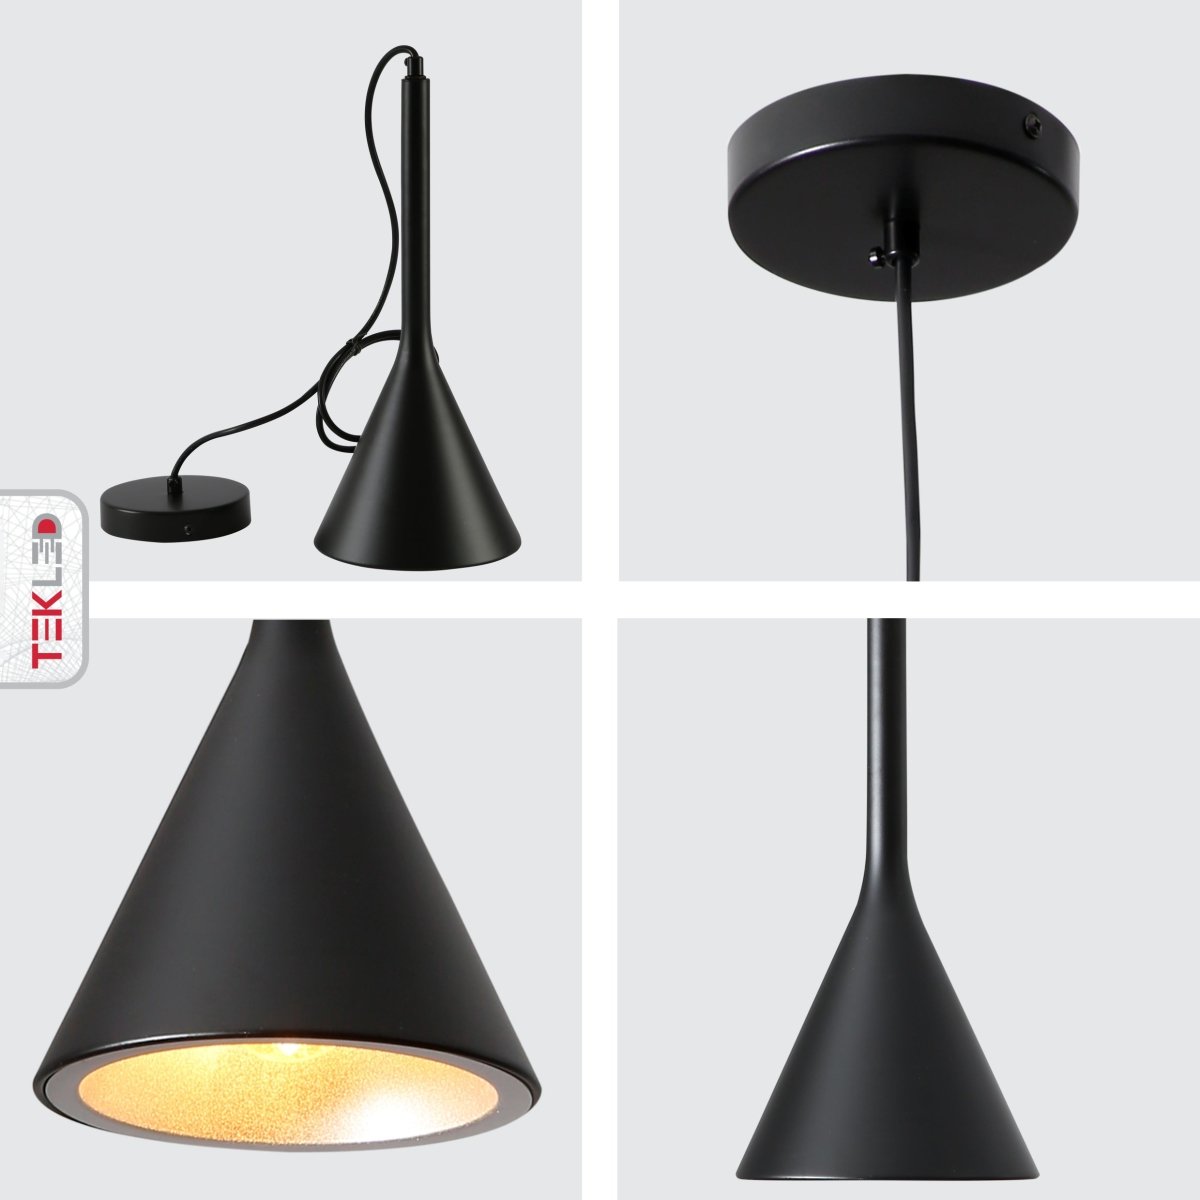 Detailed shots of Black Funnel Nordic Modern Metal Ceiling Pendant Light with E27 Fitting | TEKLED 150-18394